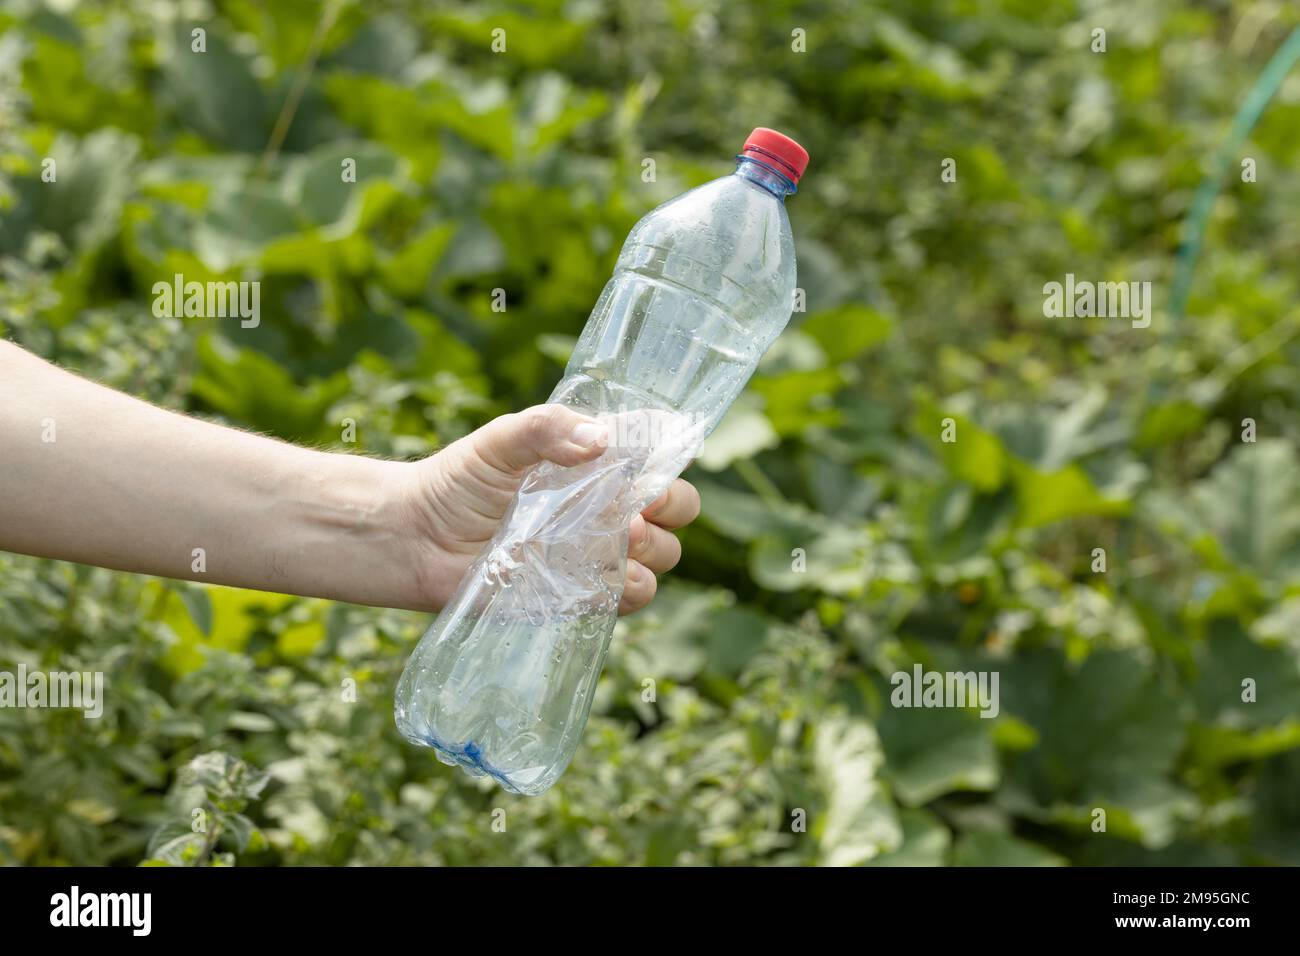 https://c8.alamy.com/comp/2M95GNC/hand-holding-crumpled-empty-plastic-bottle-in-the-park-2M95GNC.jpg